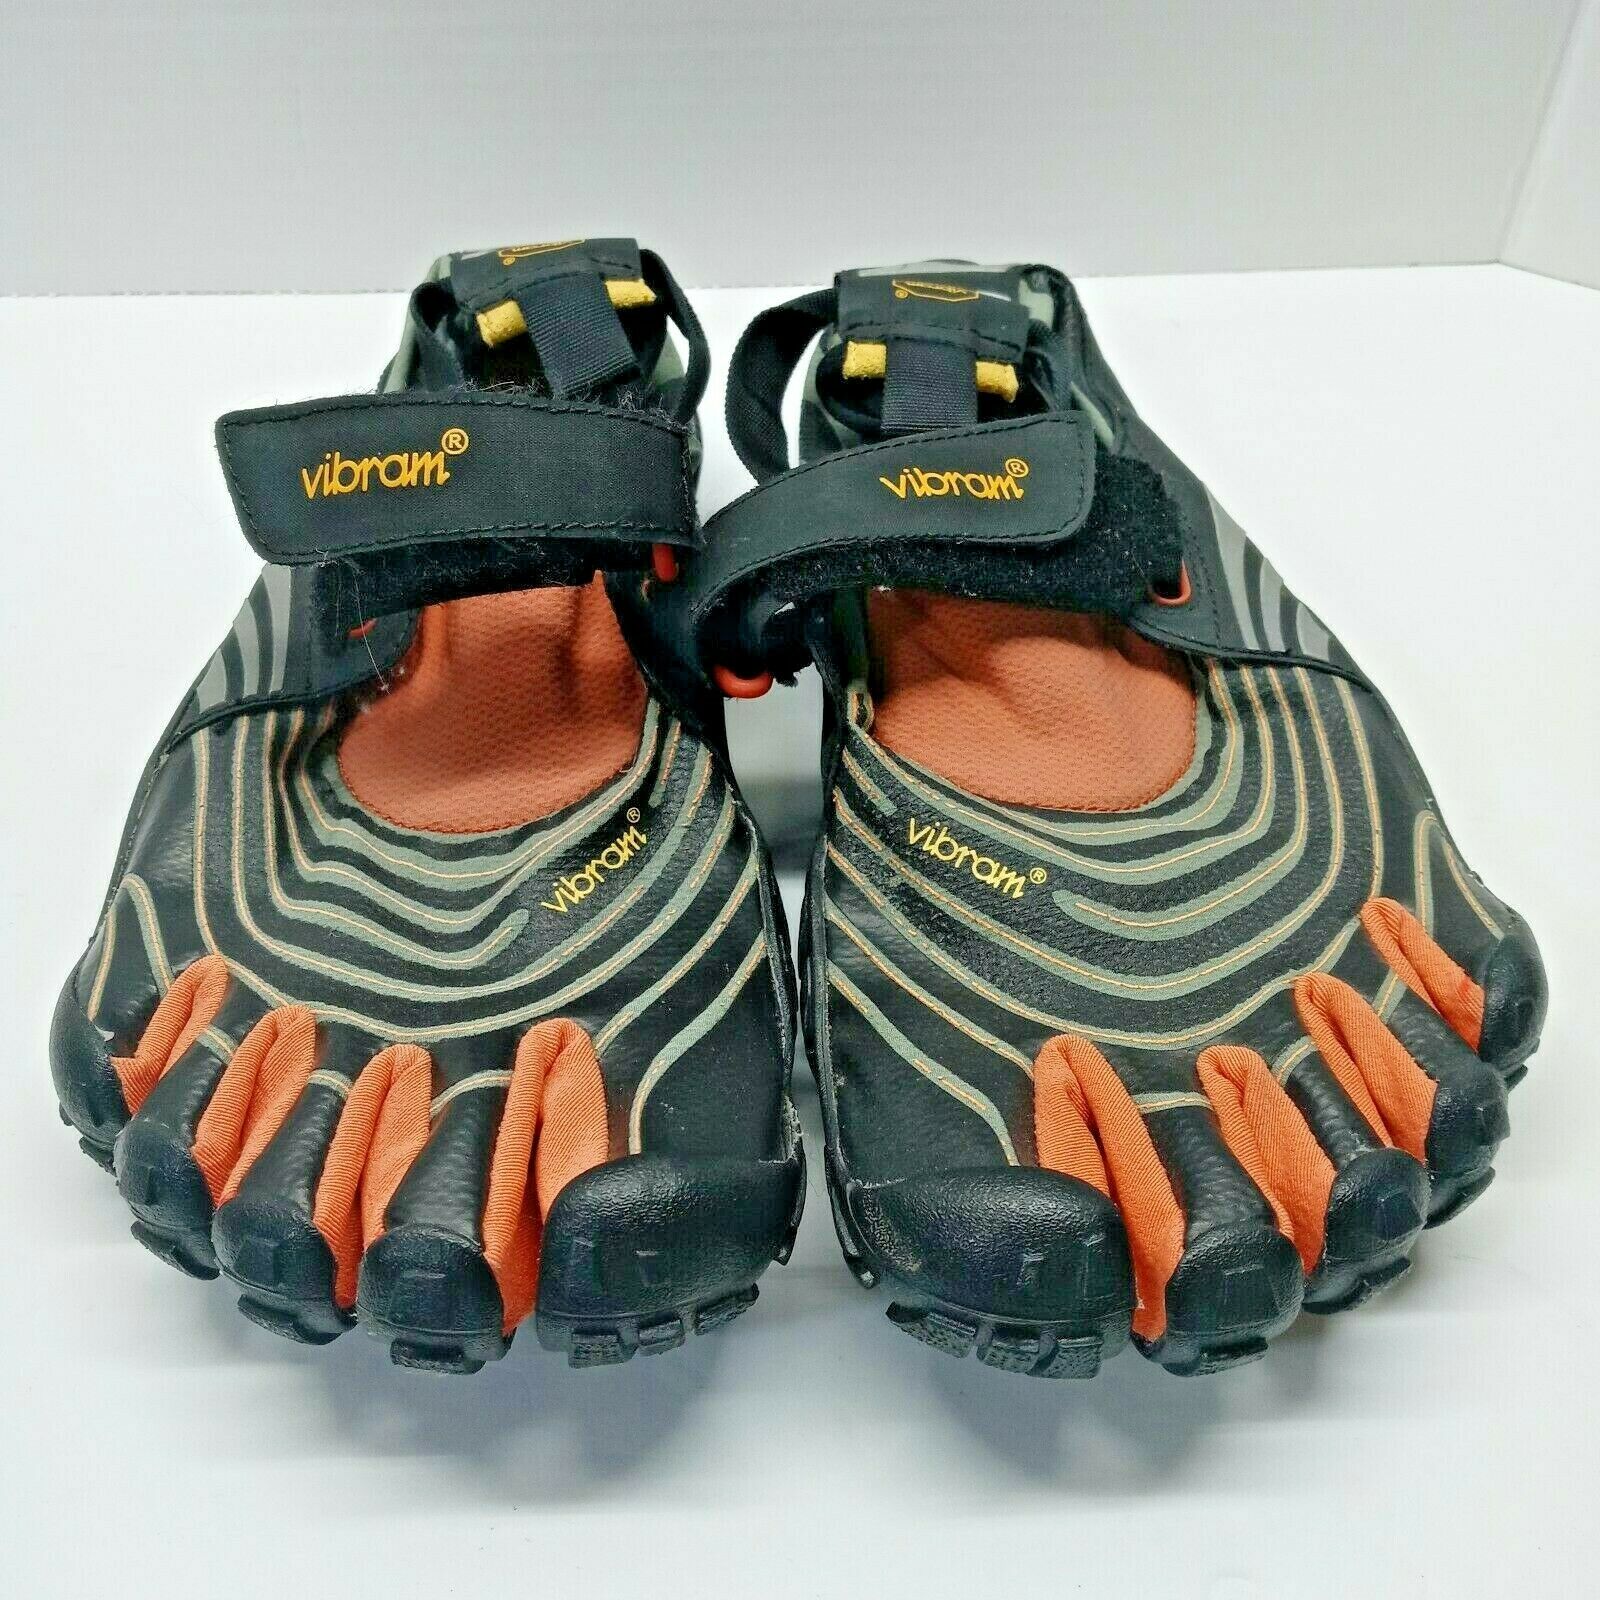 VIBRAM FiveFingers Men's Barefoot Running Shoes M4553 Size EU 40 / US 8 8.5- GUC